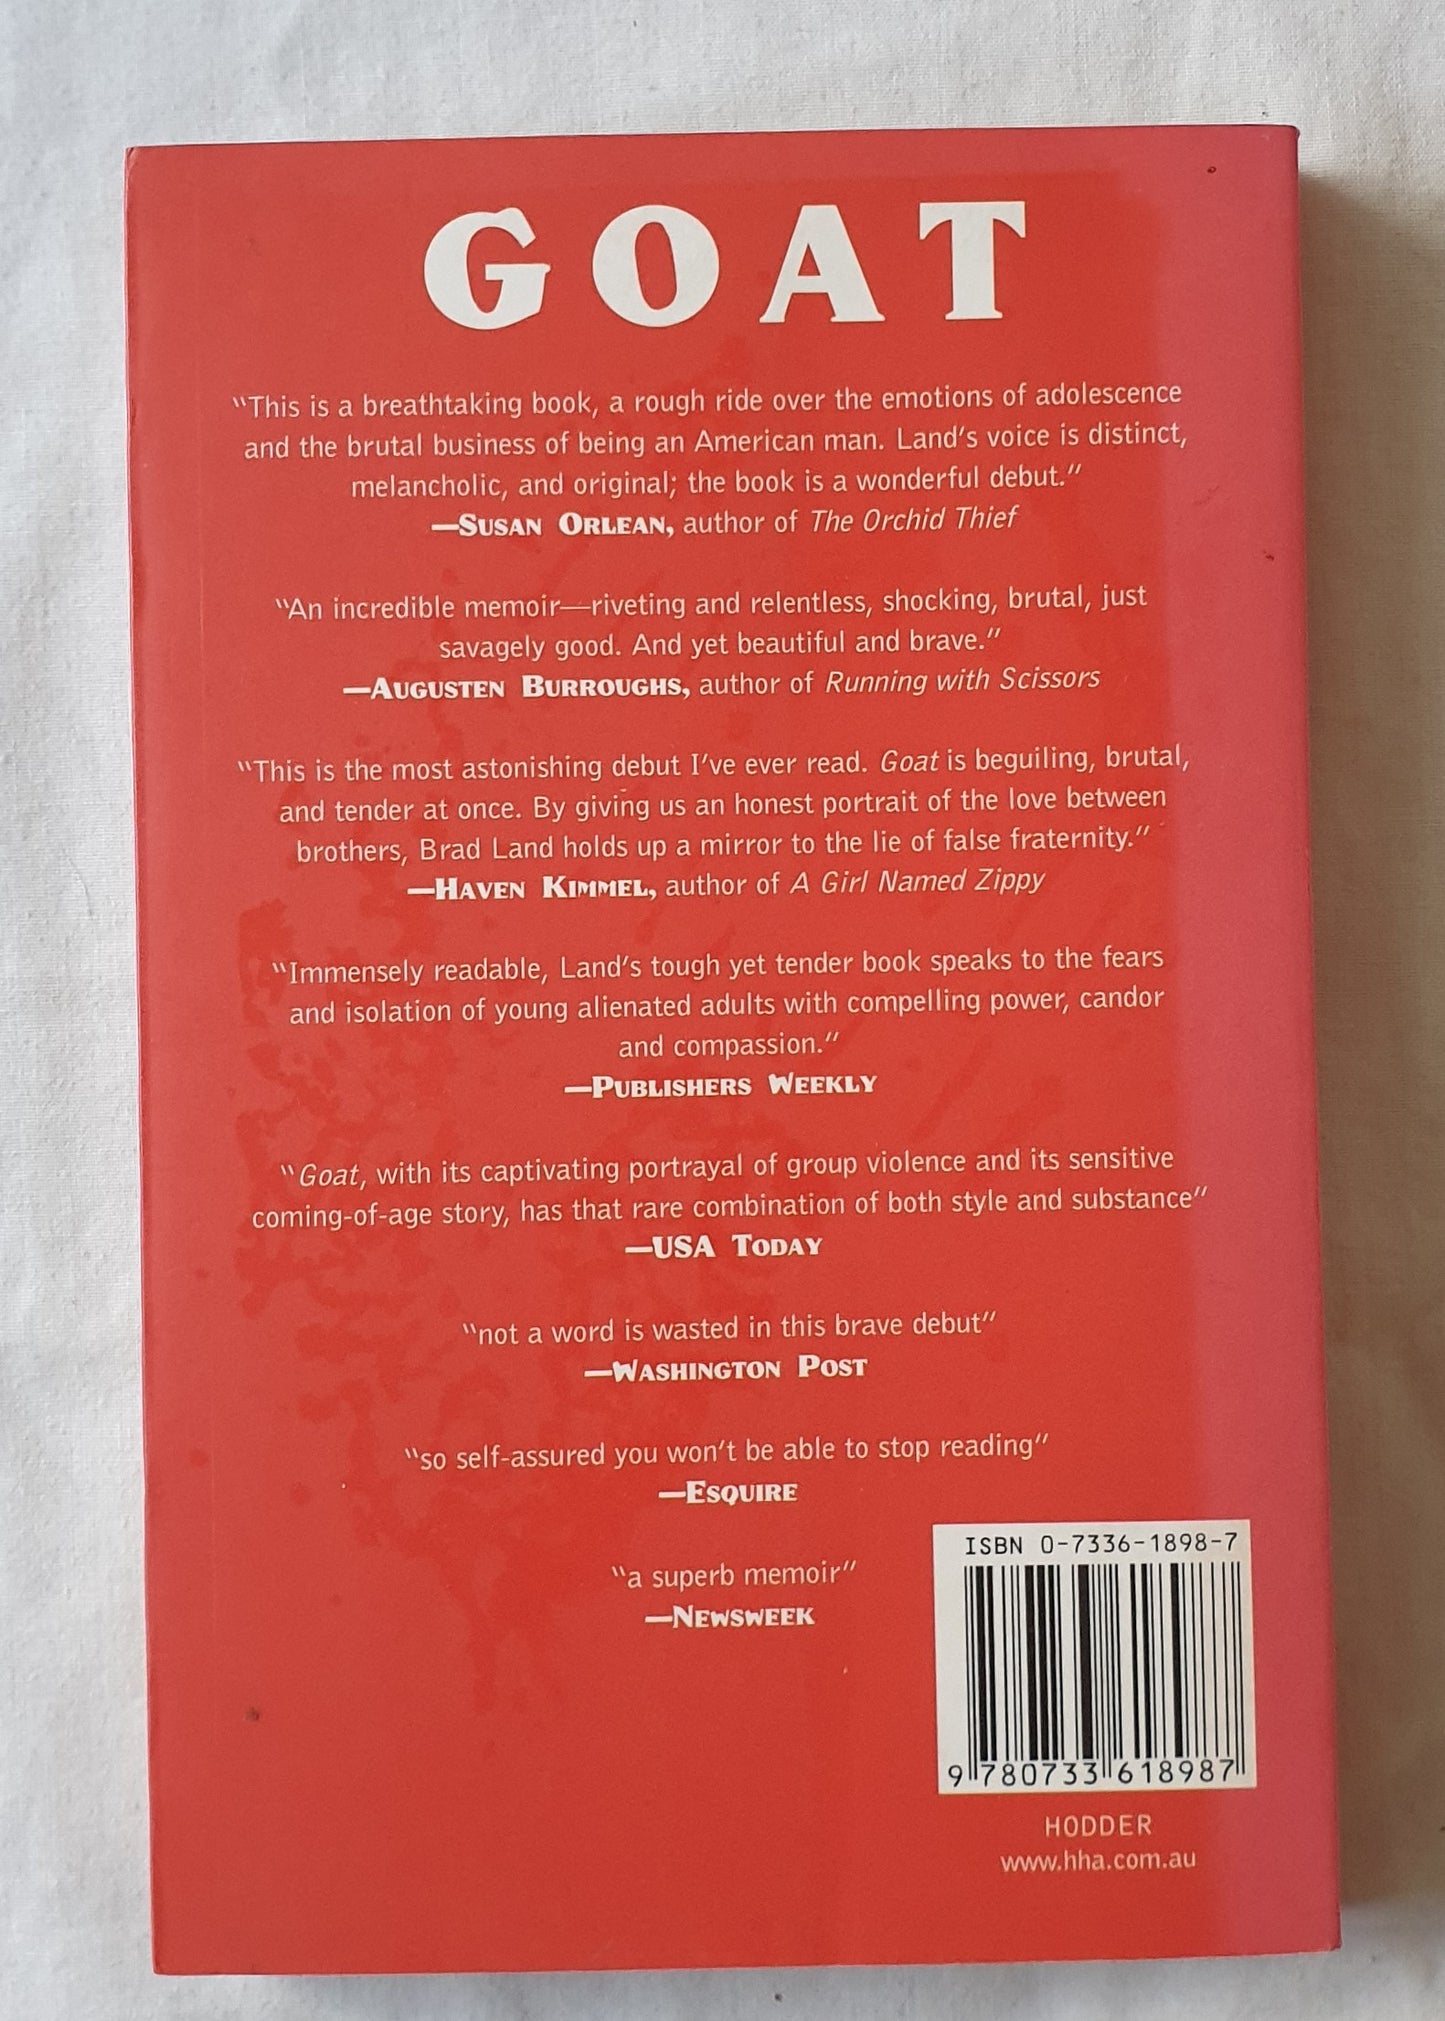 Goat by Brad Land